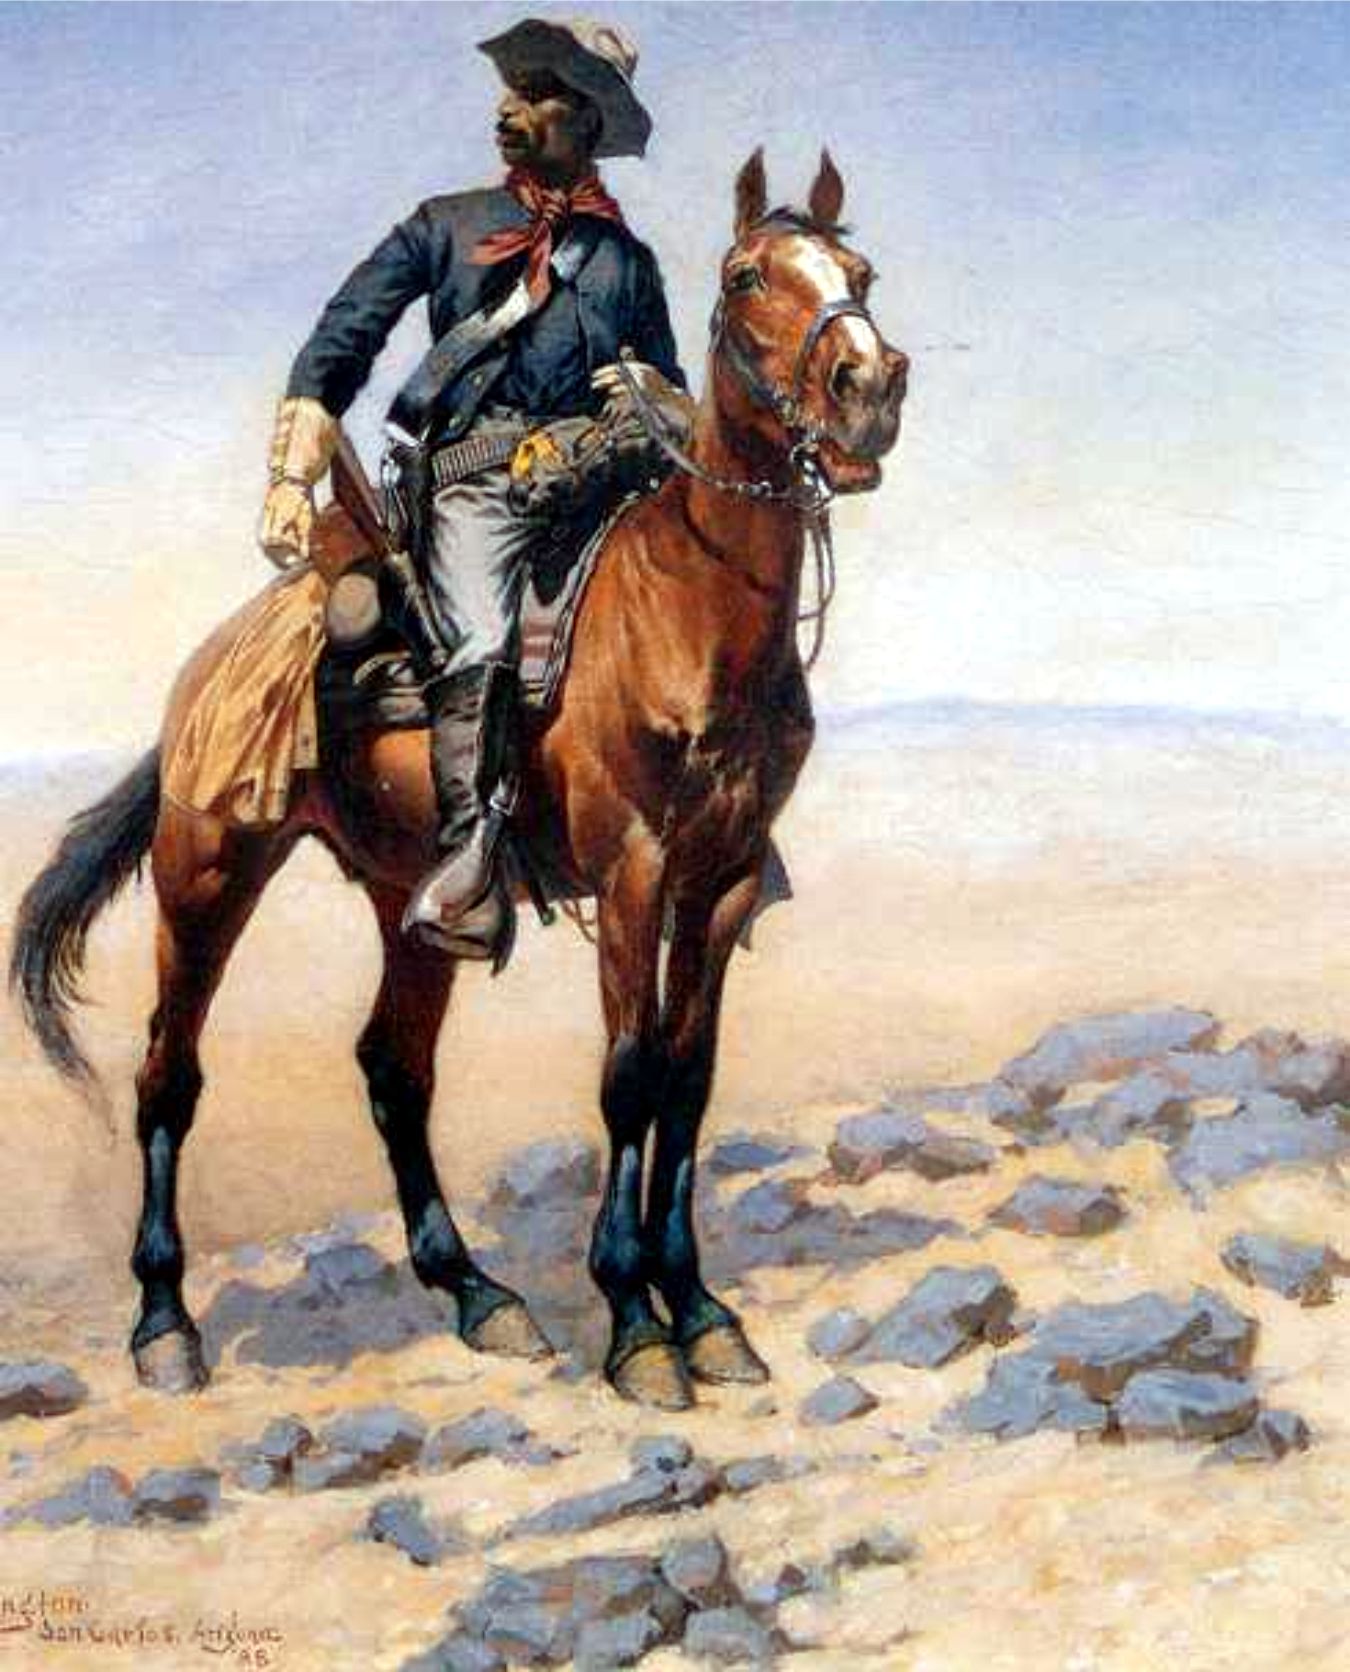 BUFFALO SOLDIER - Frederick Remington